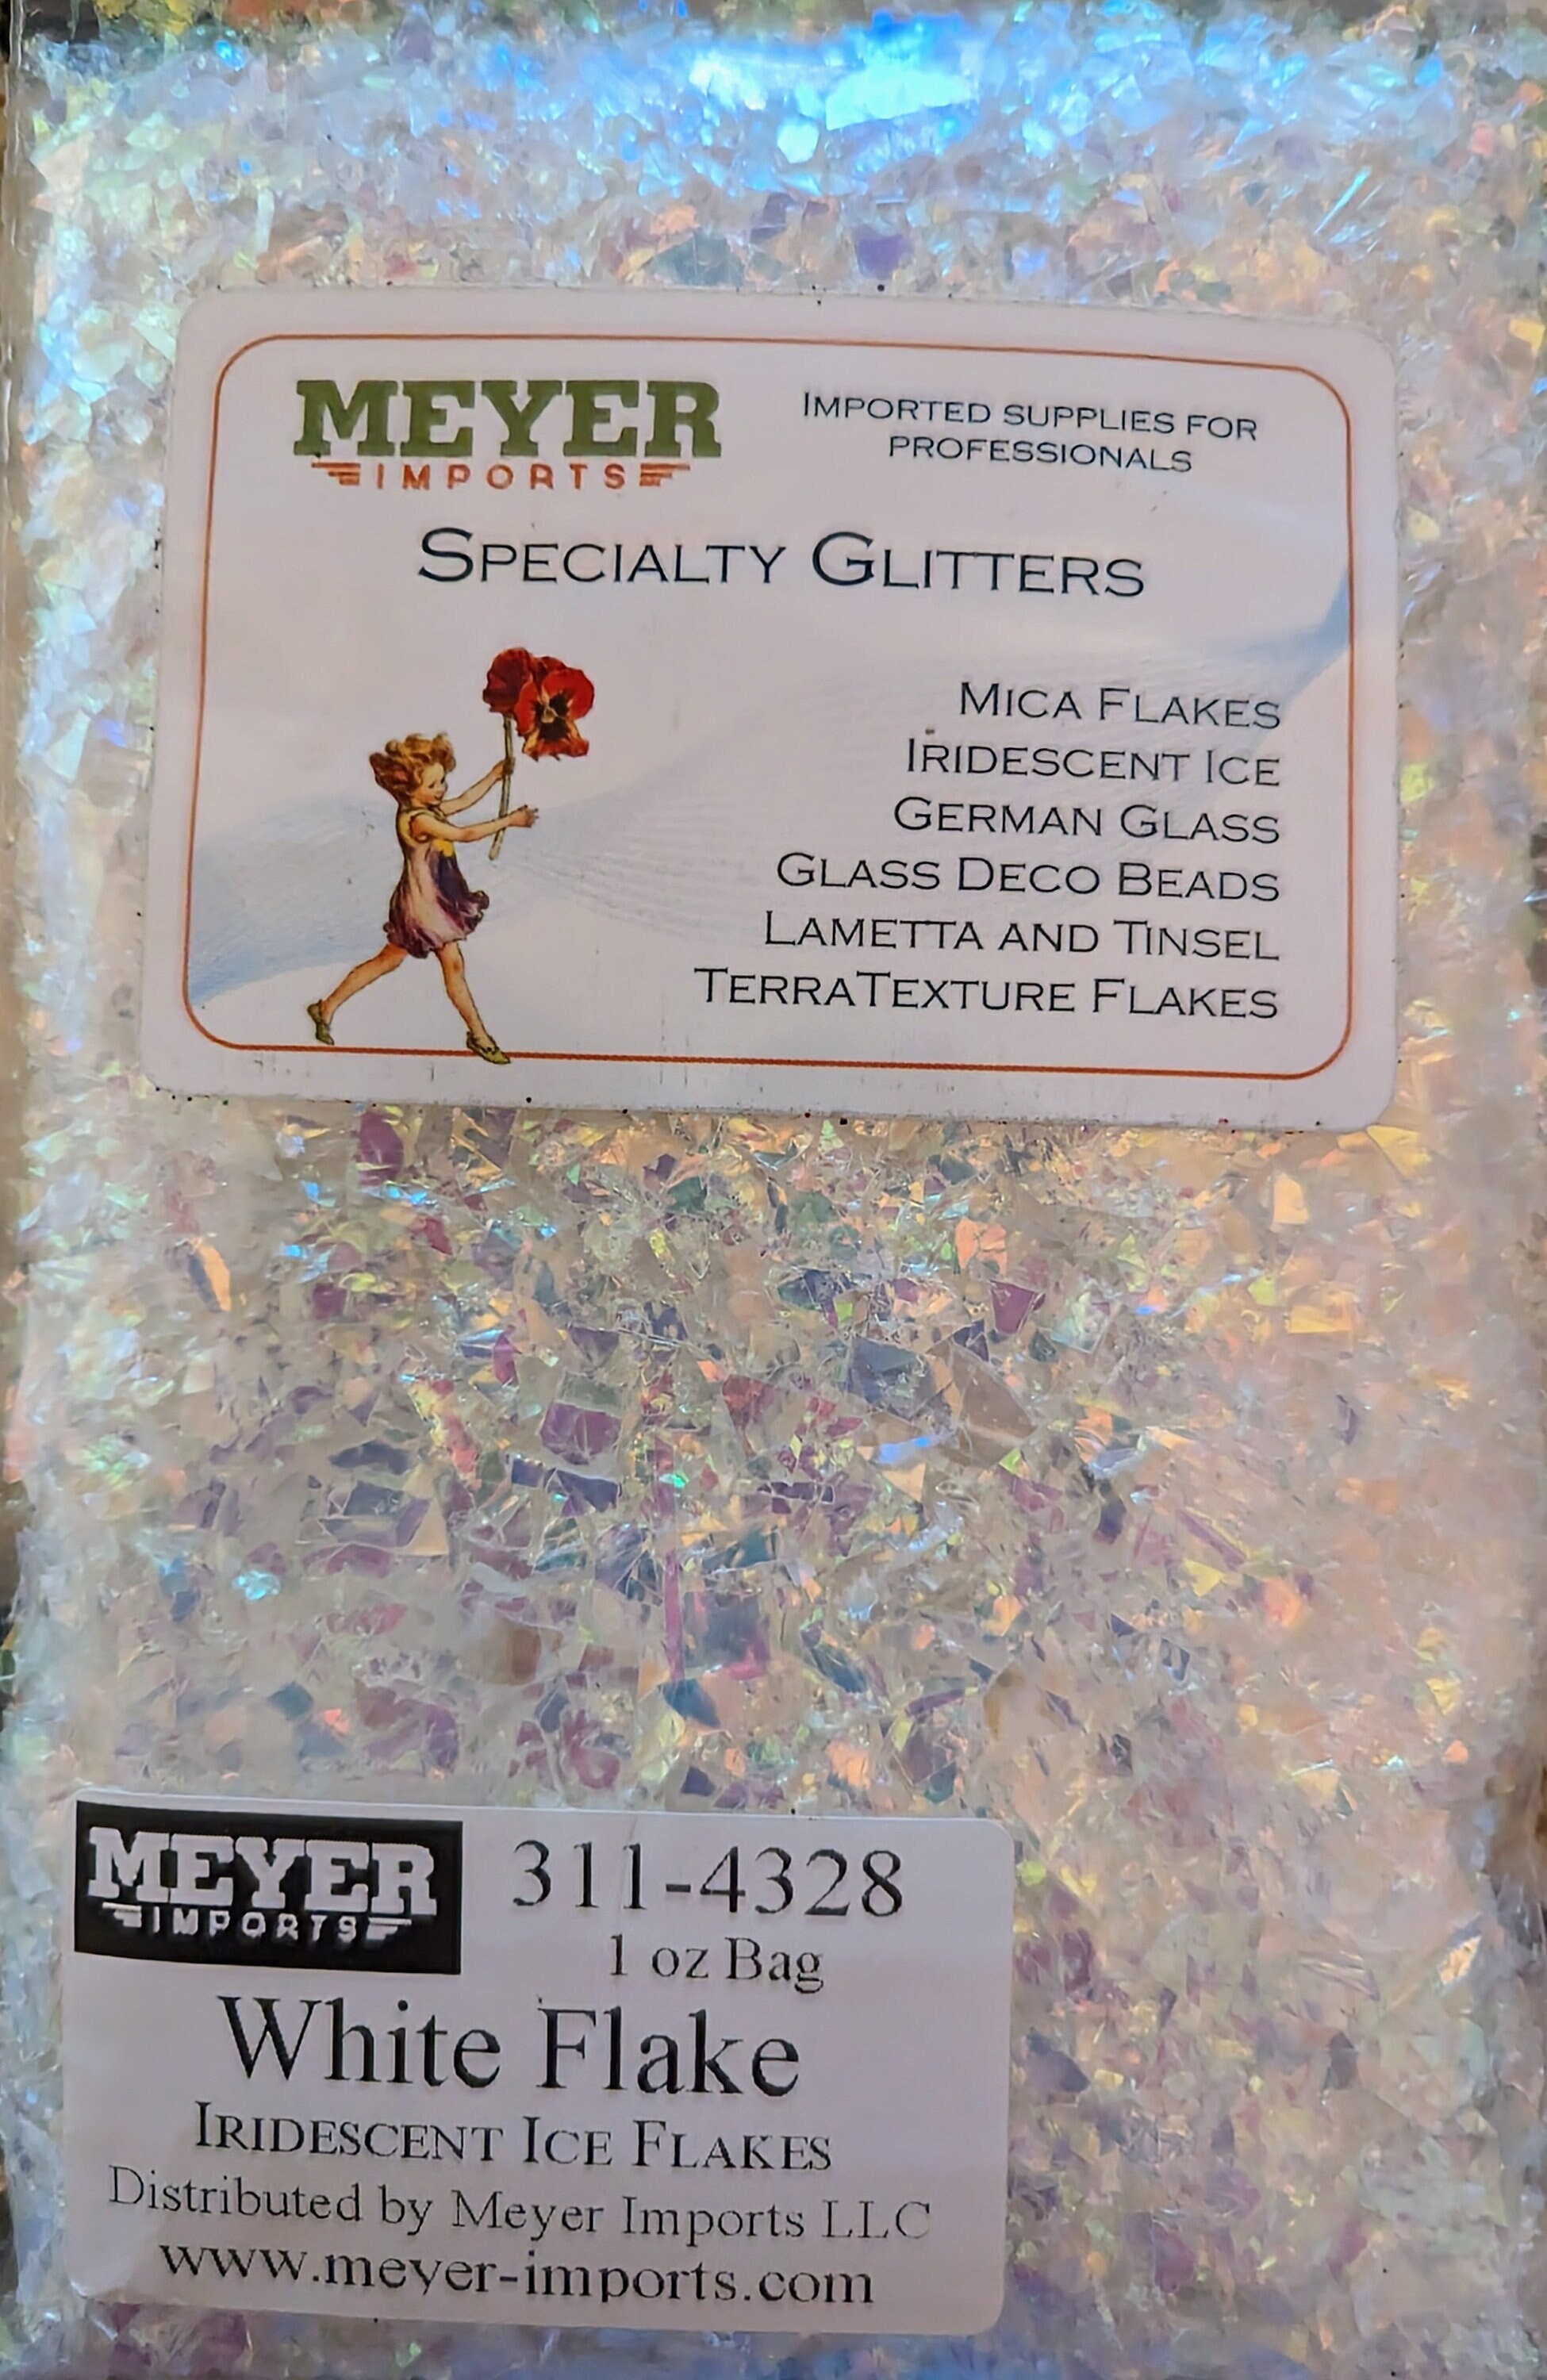 Meyer Imports, LLC